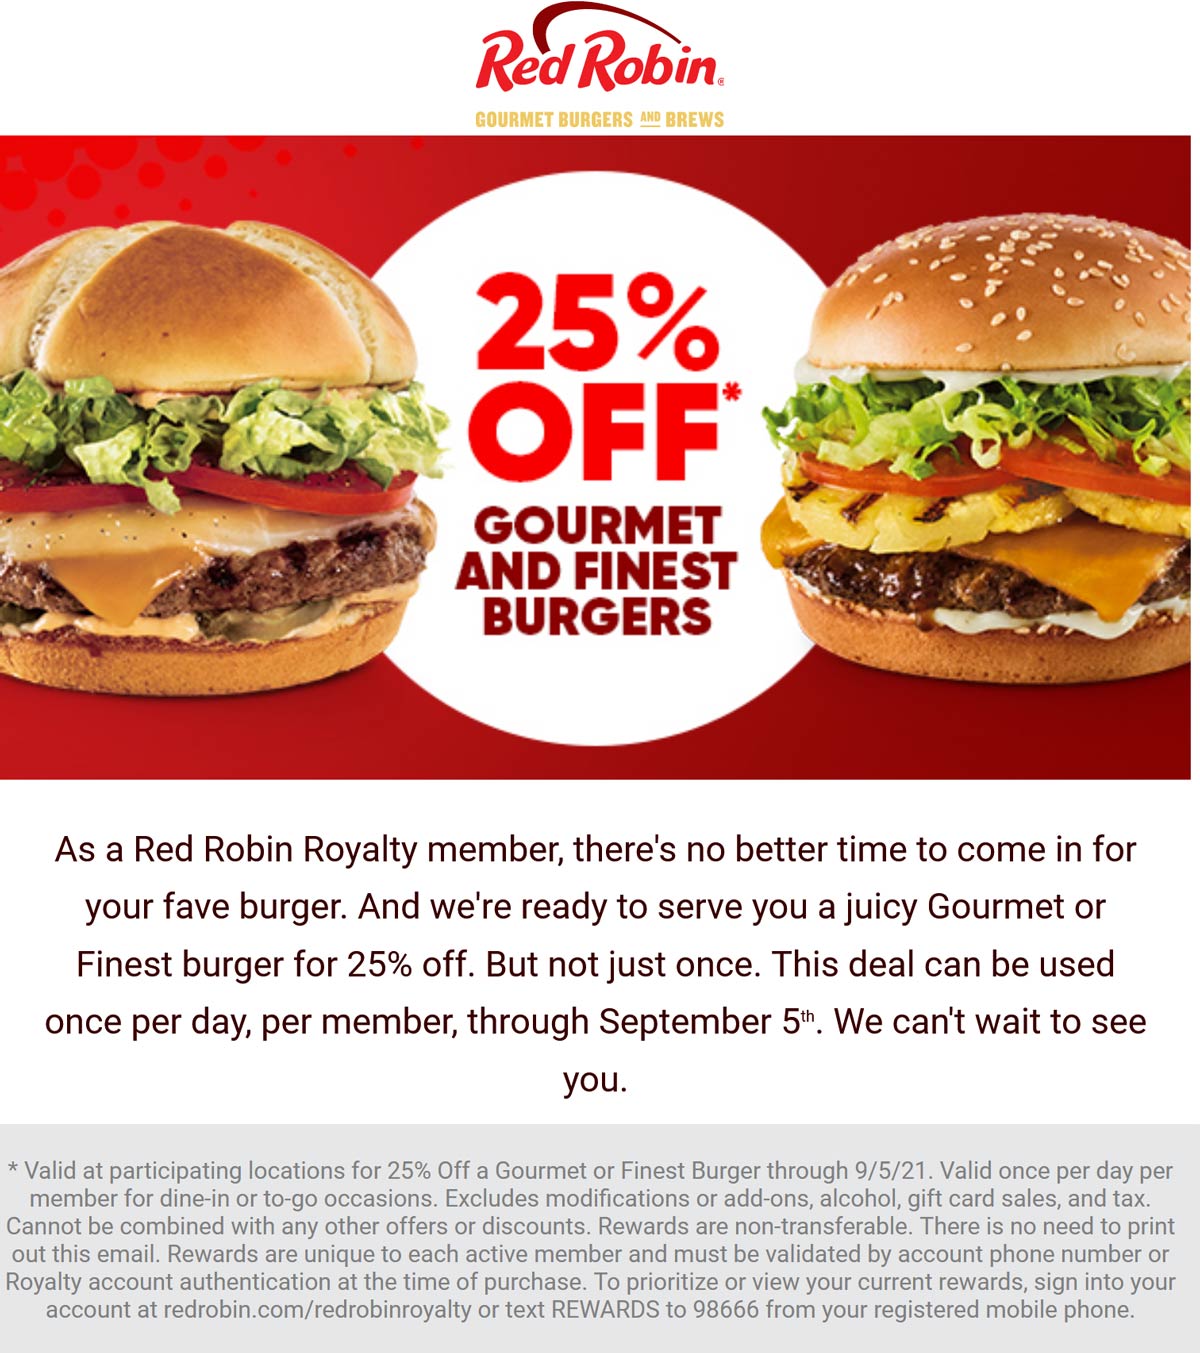 Red Robin restaurants Coupon  25% off gourmet cheeseburgers at Red Robin restaurants #redrobin 